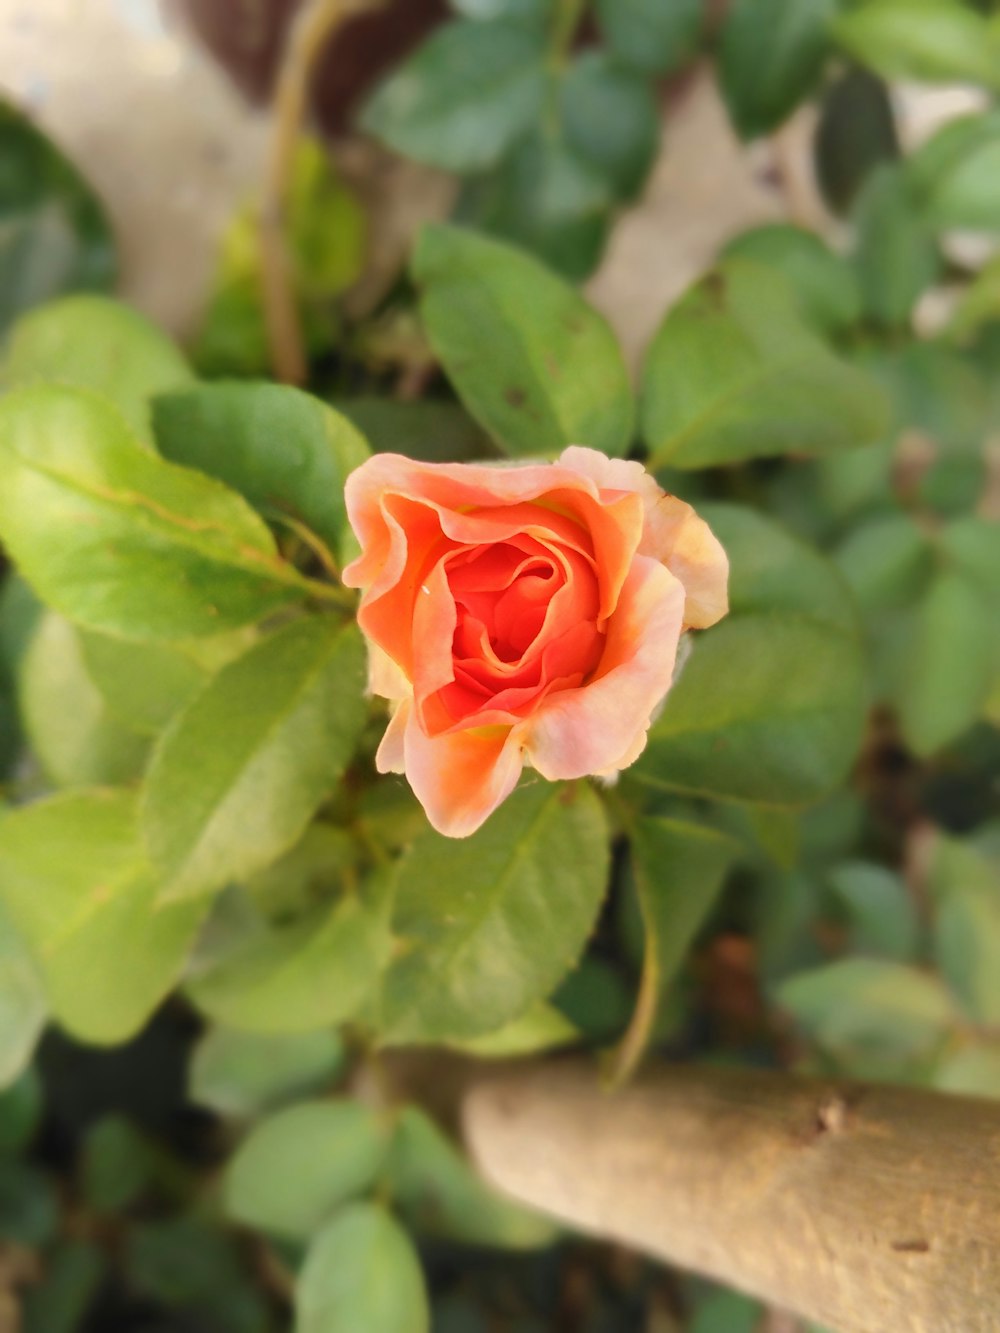 beige rose flower